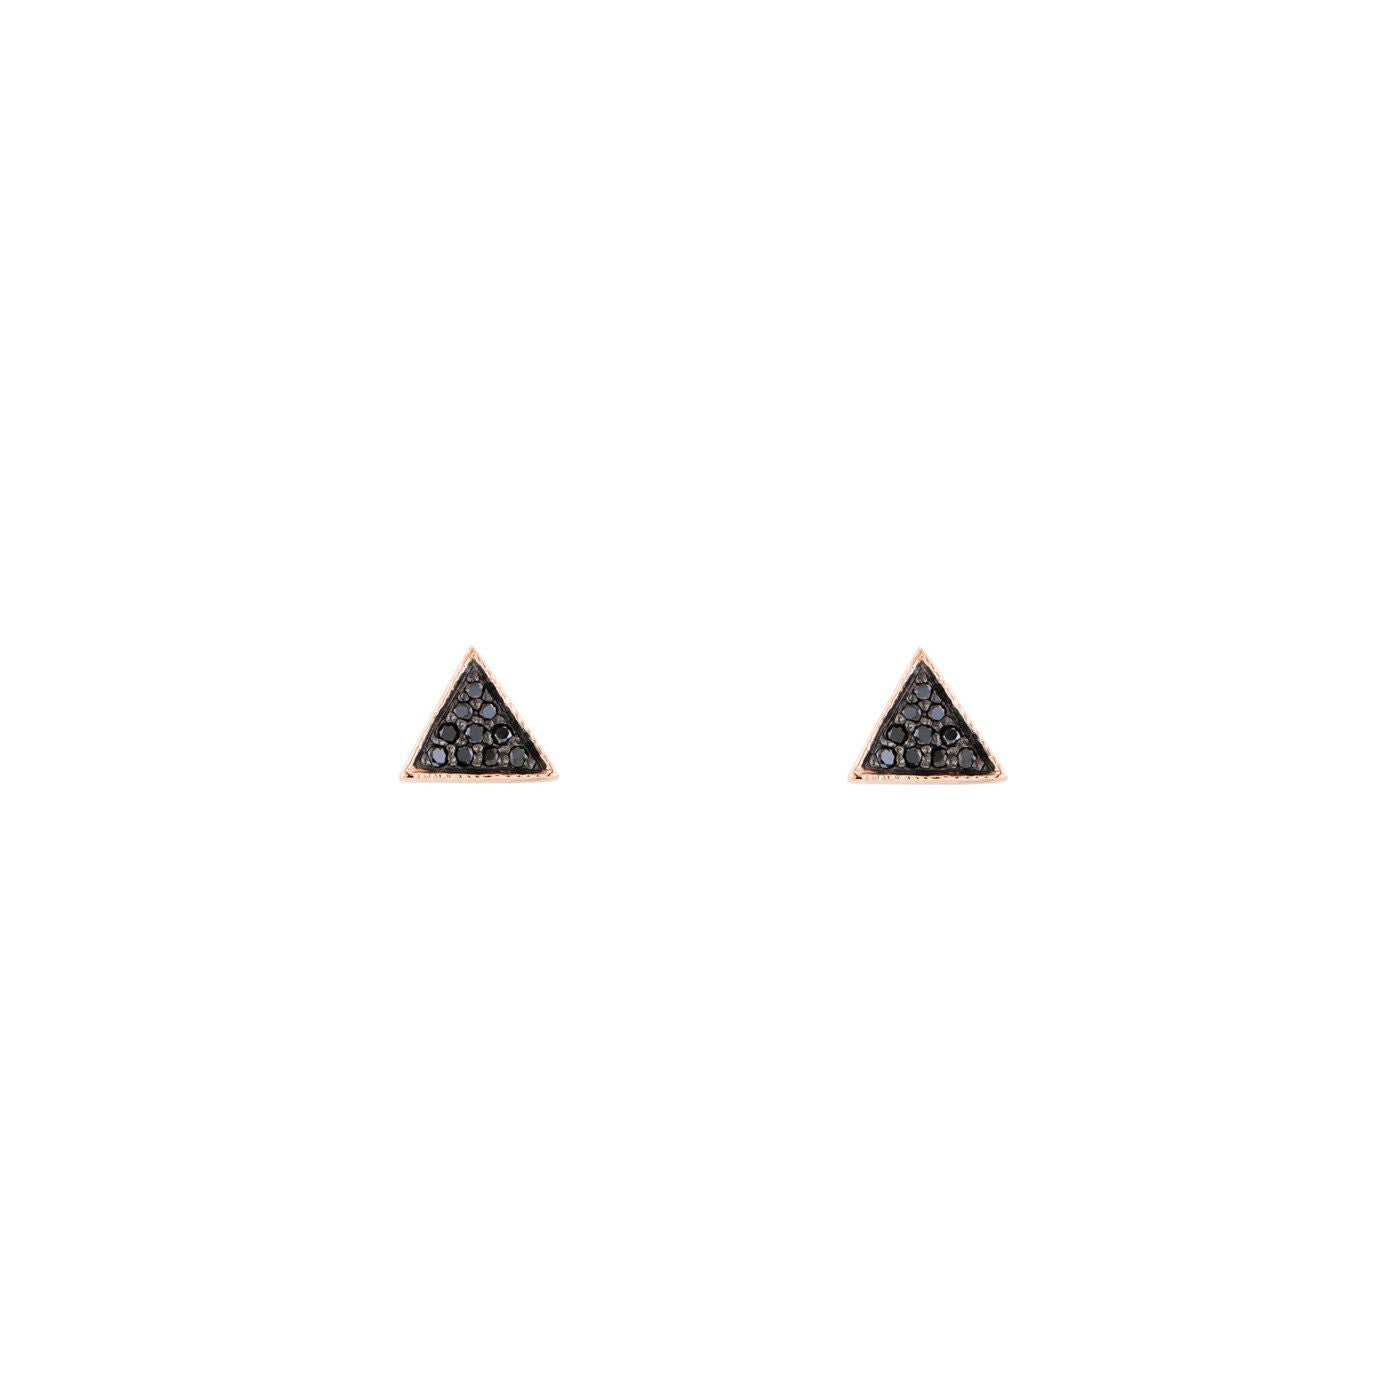 black diamond triangle earrings PRE 412 14KY_086d6824 bab9 463e 9809 72827a3883d1